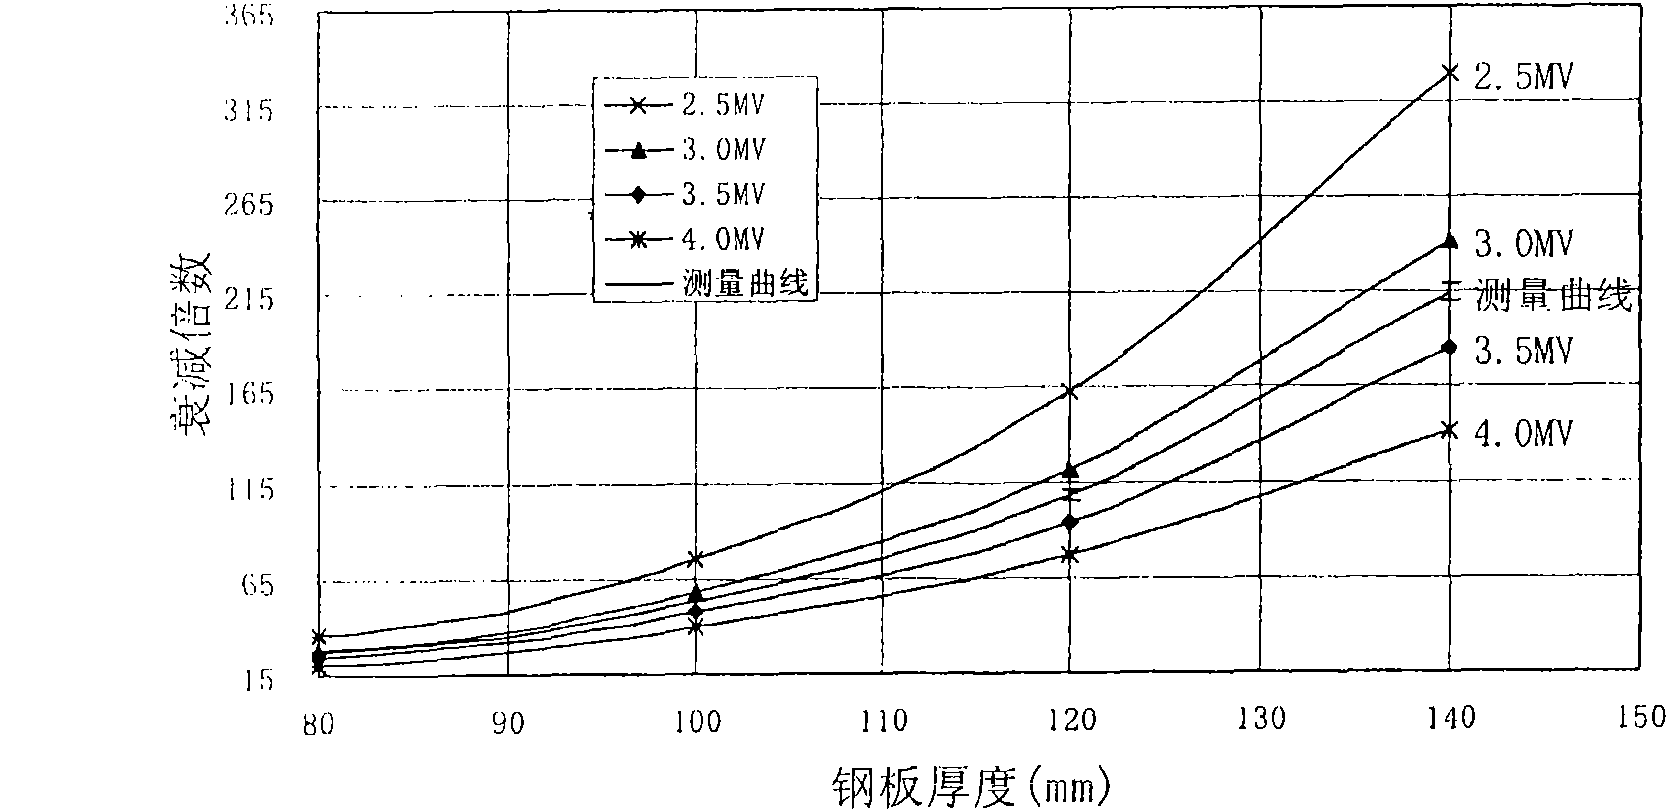 Method for measuring energy of accelerator